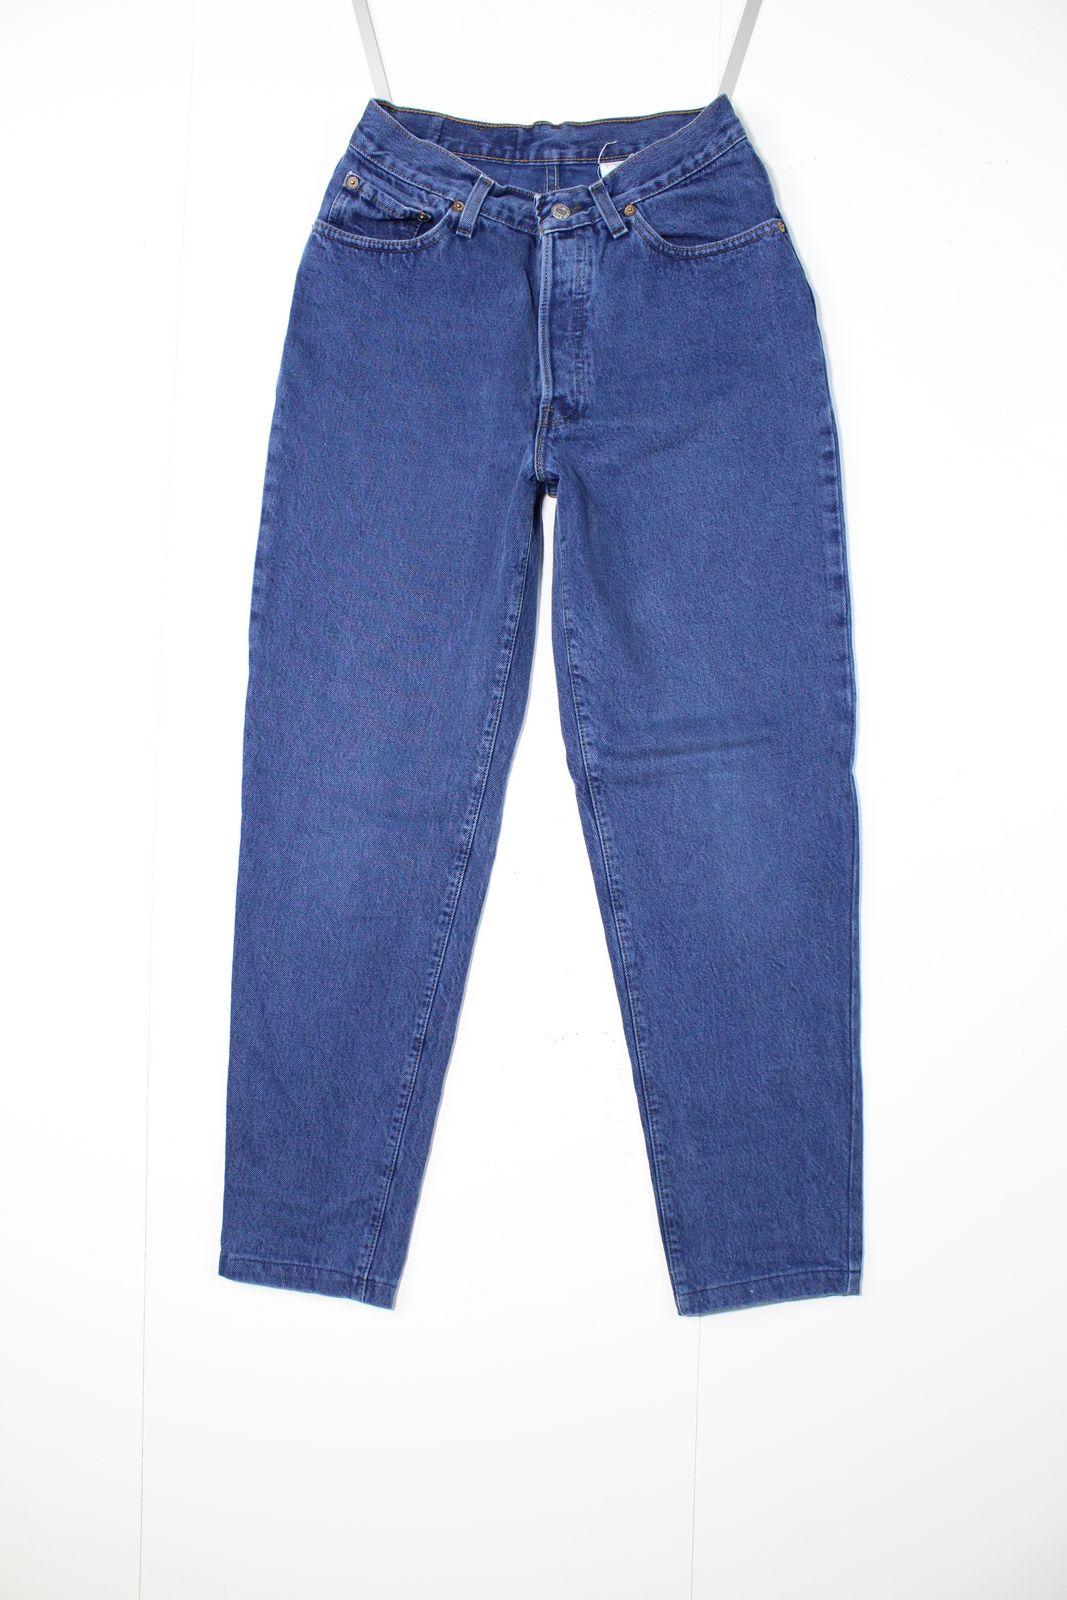 Levi's Donna vita alta W27 Made In USA Jeans Vintage